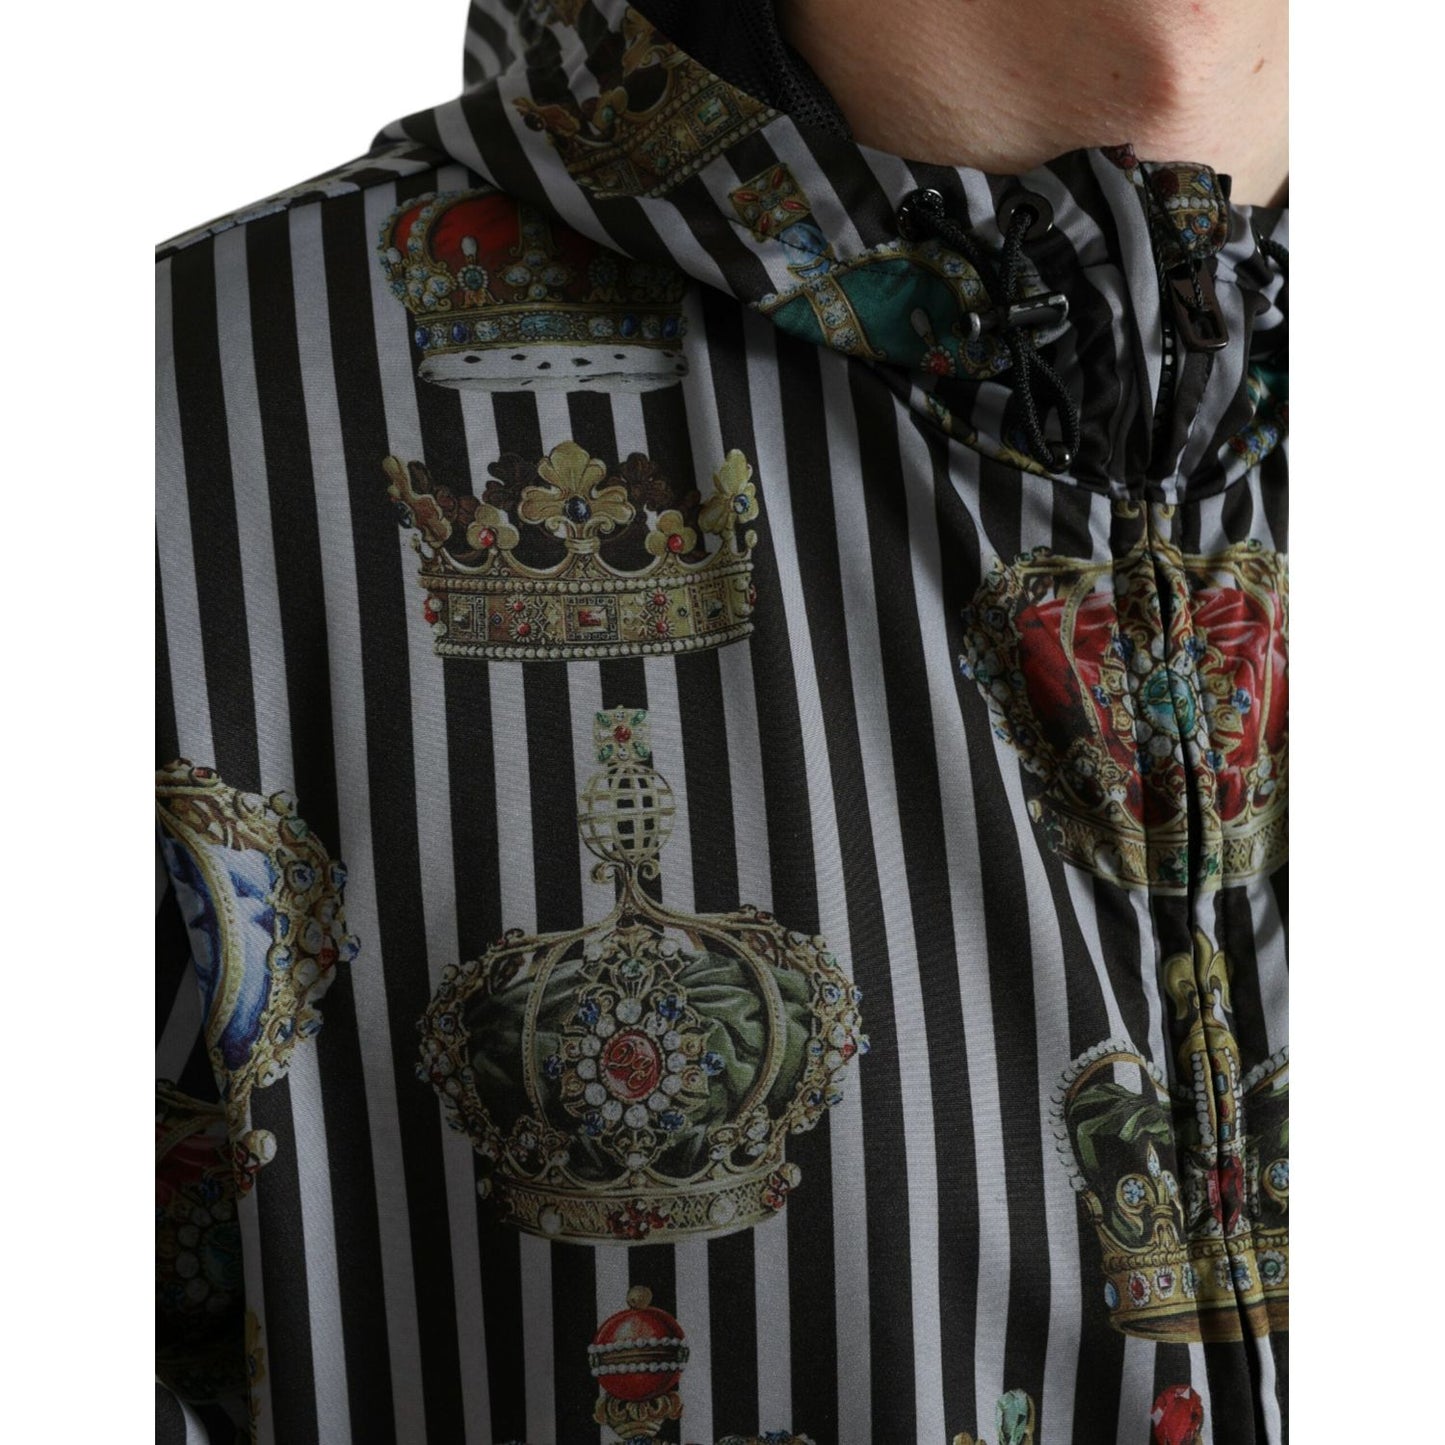 Dolce & Gabbana Chic Black & White Hooded Tech Jacket black-white-striped-crown-hooded-jacket